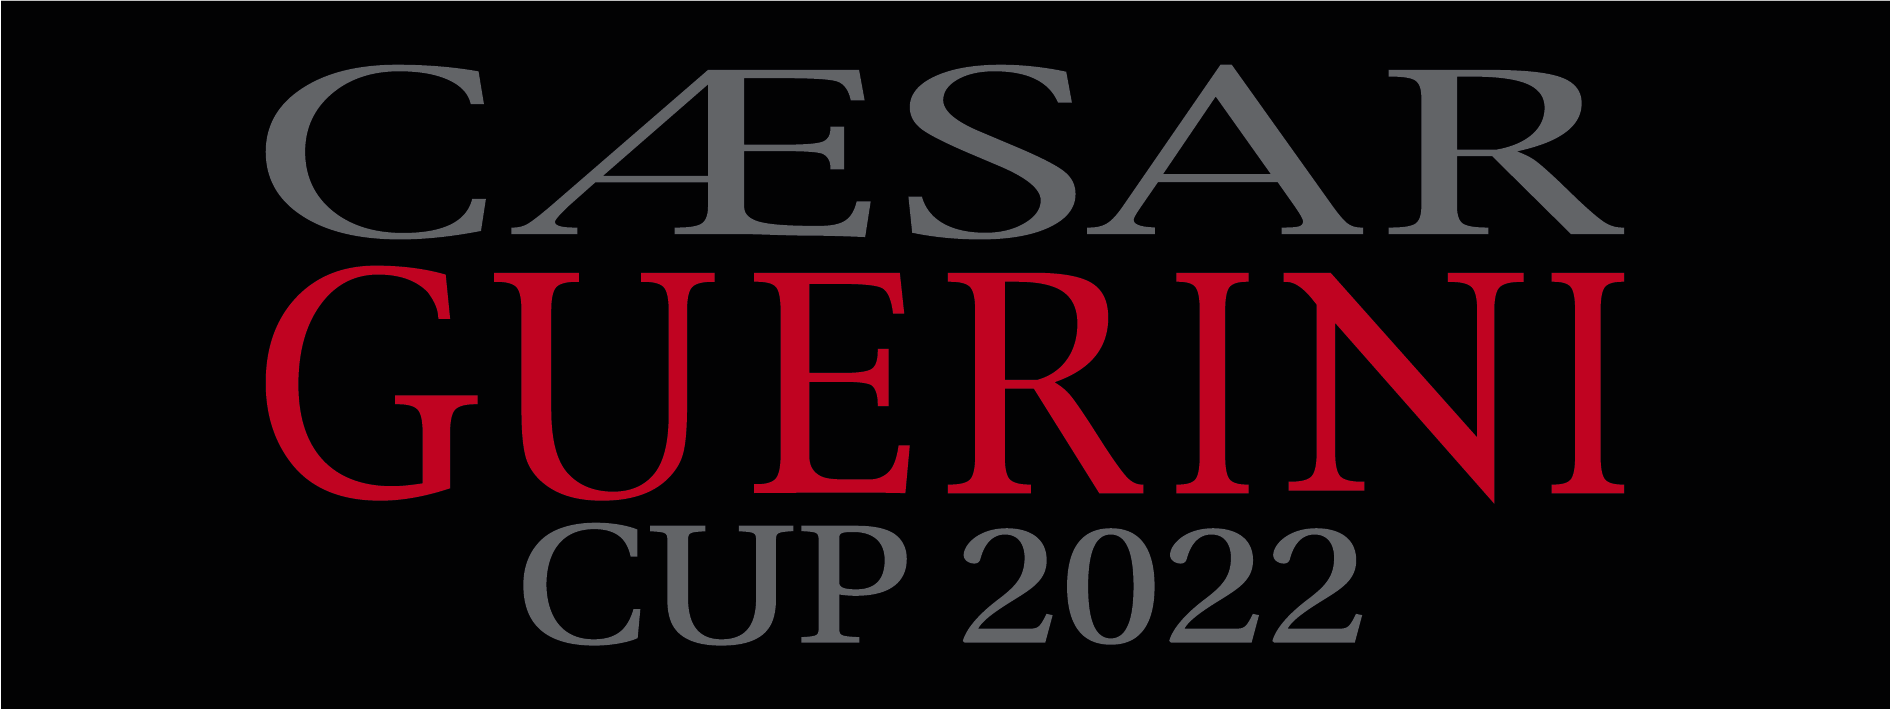 caesar-guerini-cup-2022-header